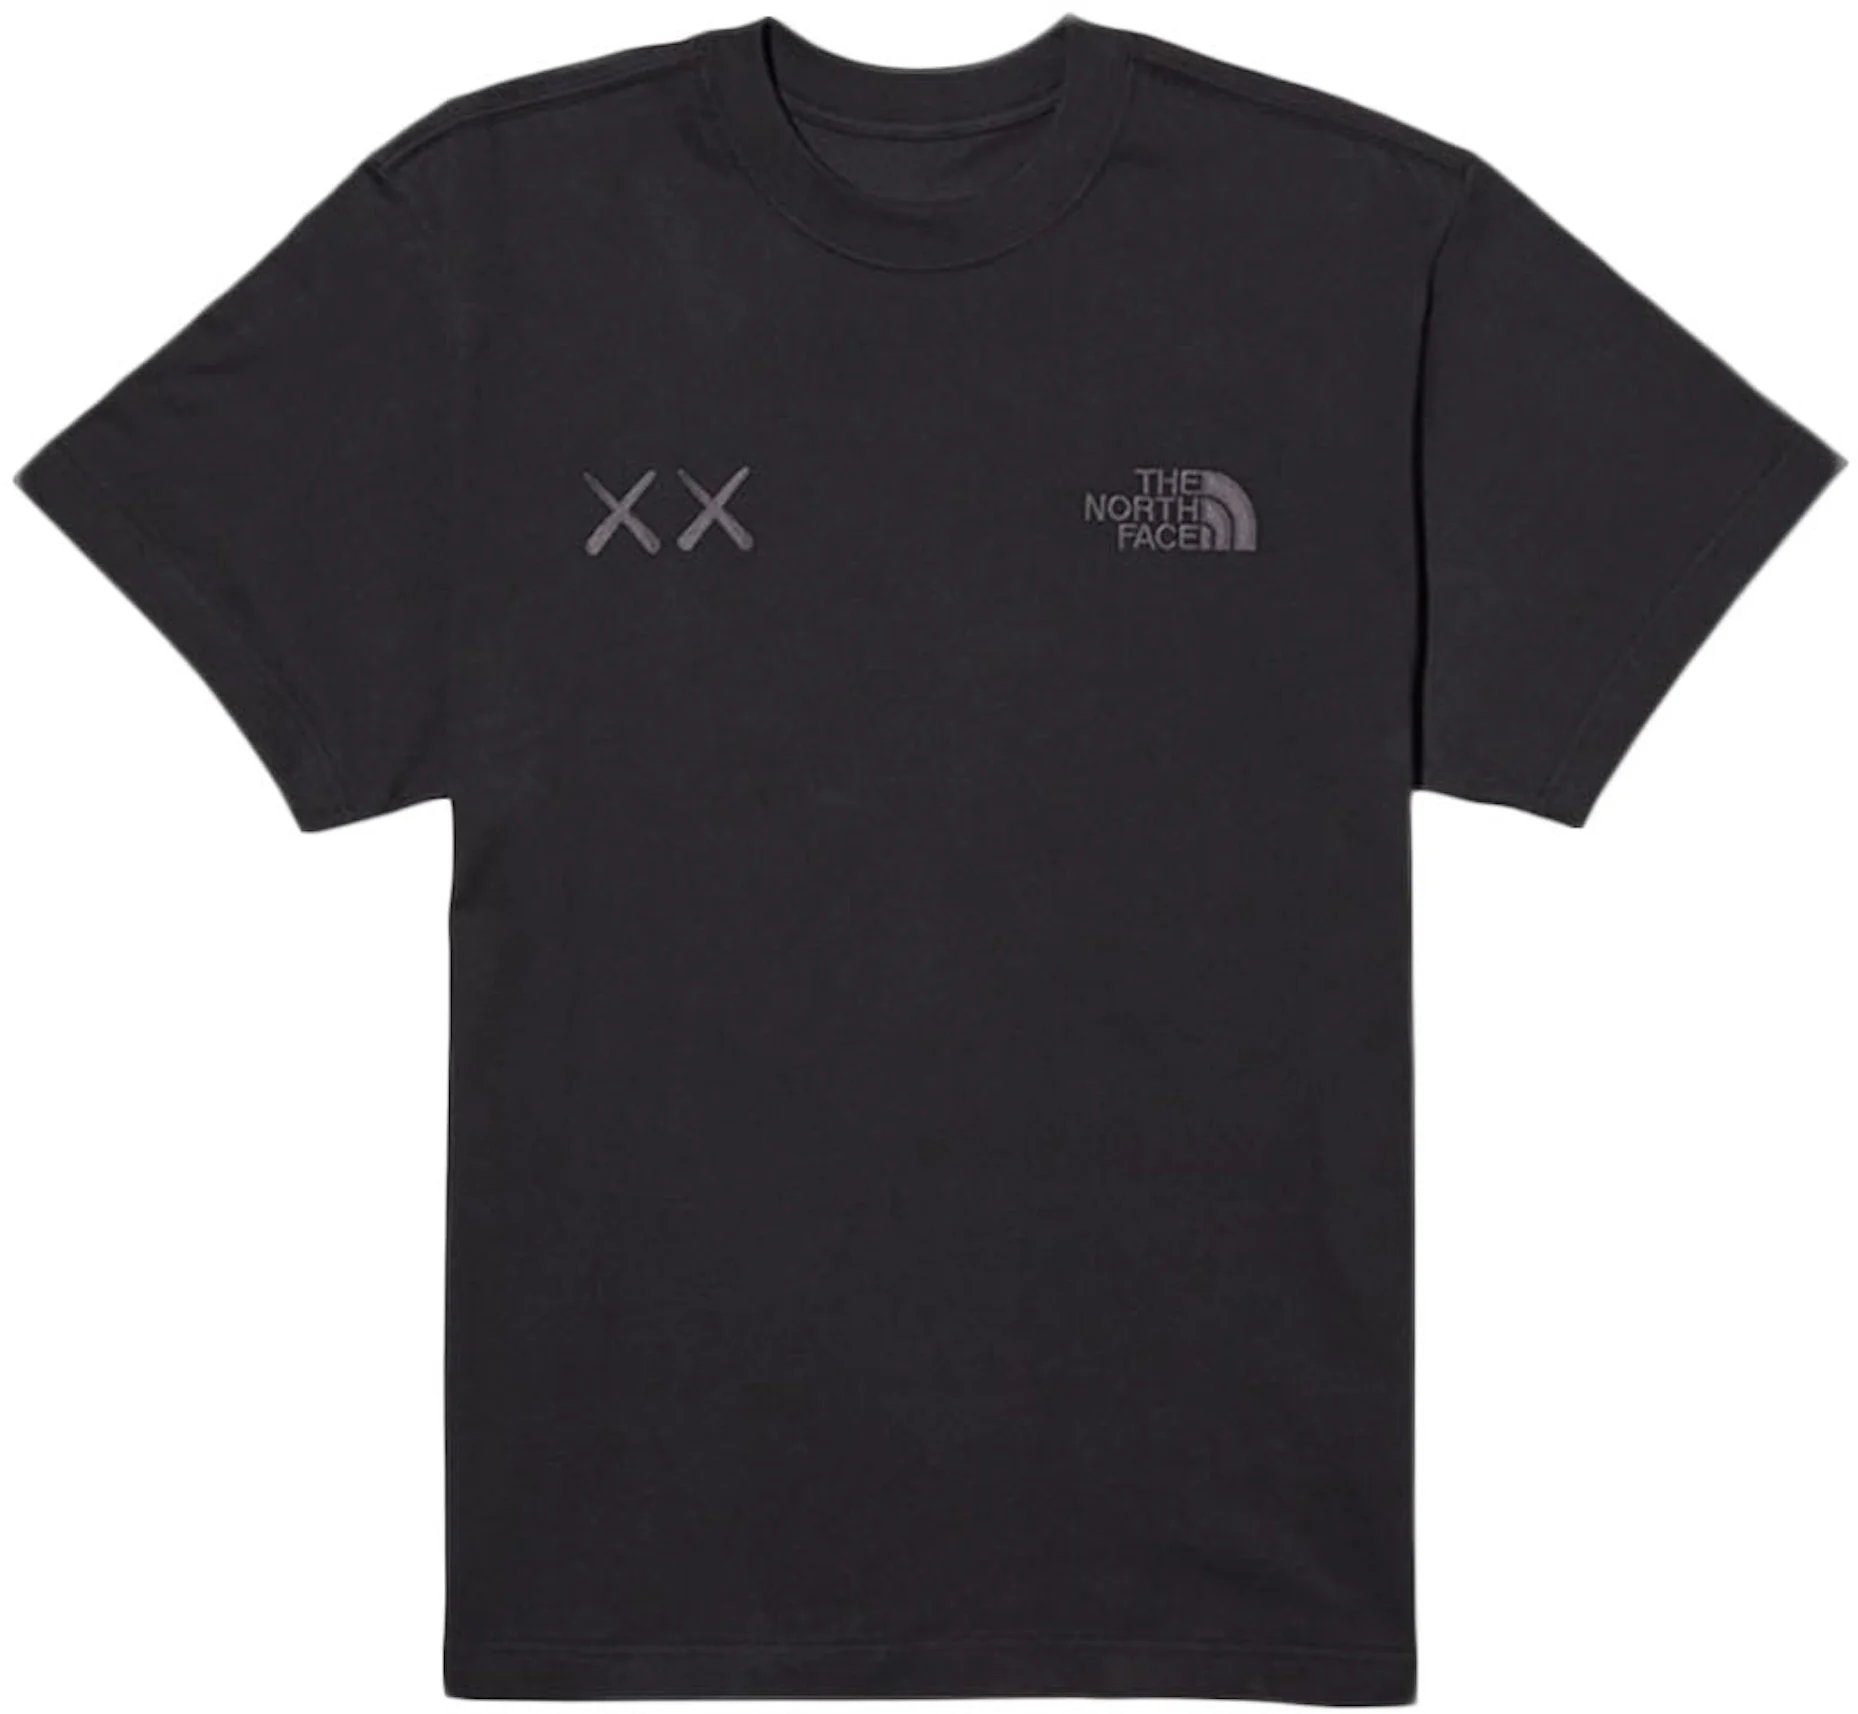 Kaws x The North Face T-Shirt 'Black